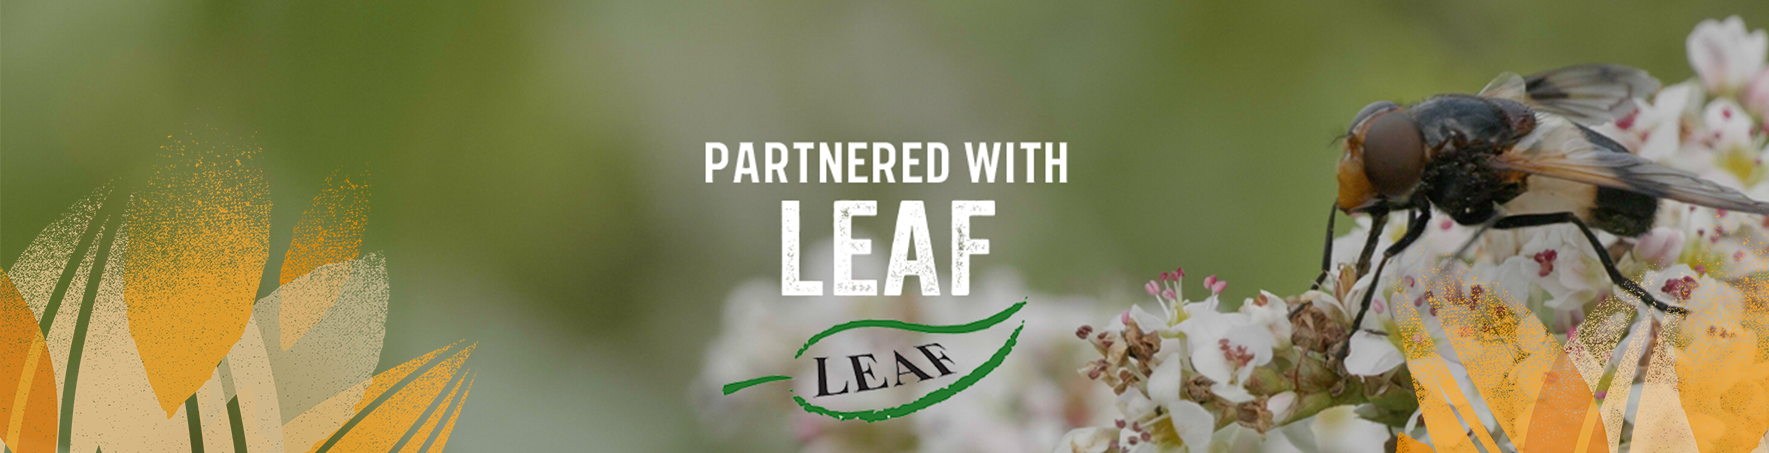 Partnered with LEAF